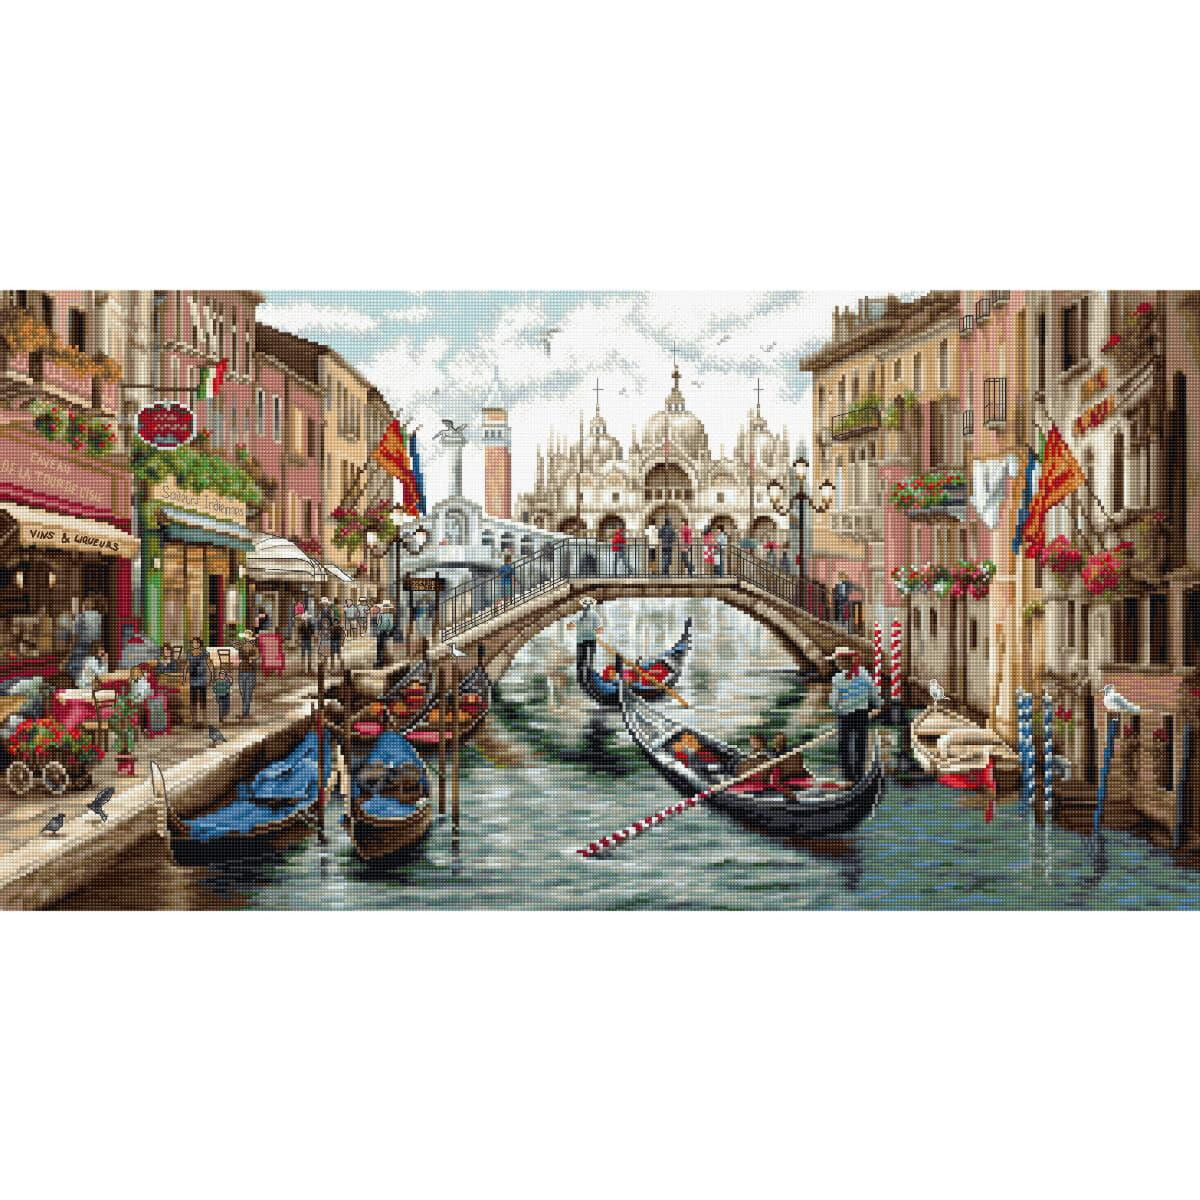 Eine geschäftige Kanalszene in Venedig zeigt...